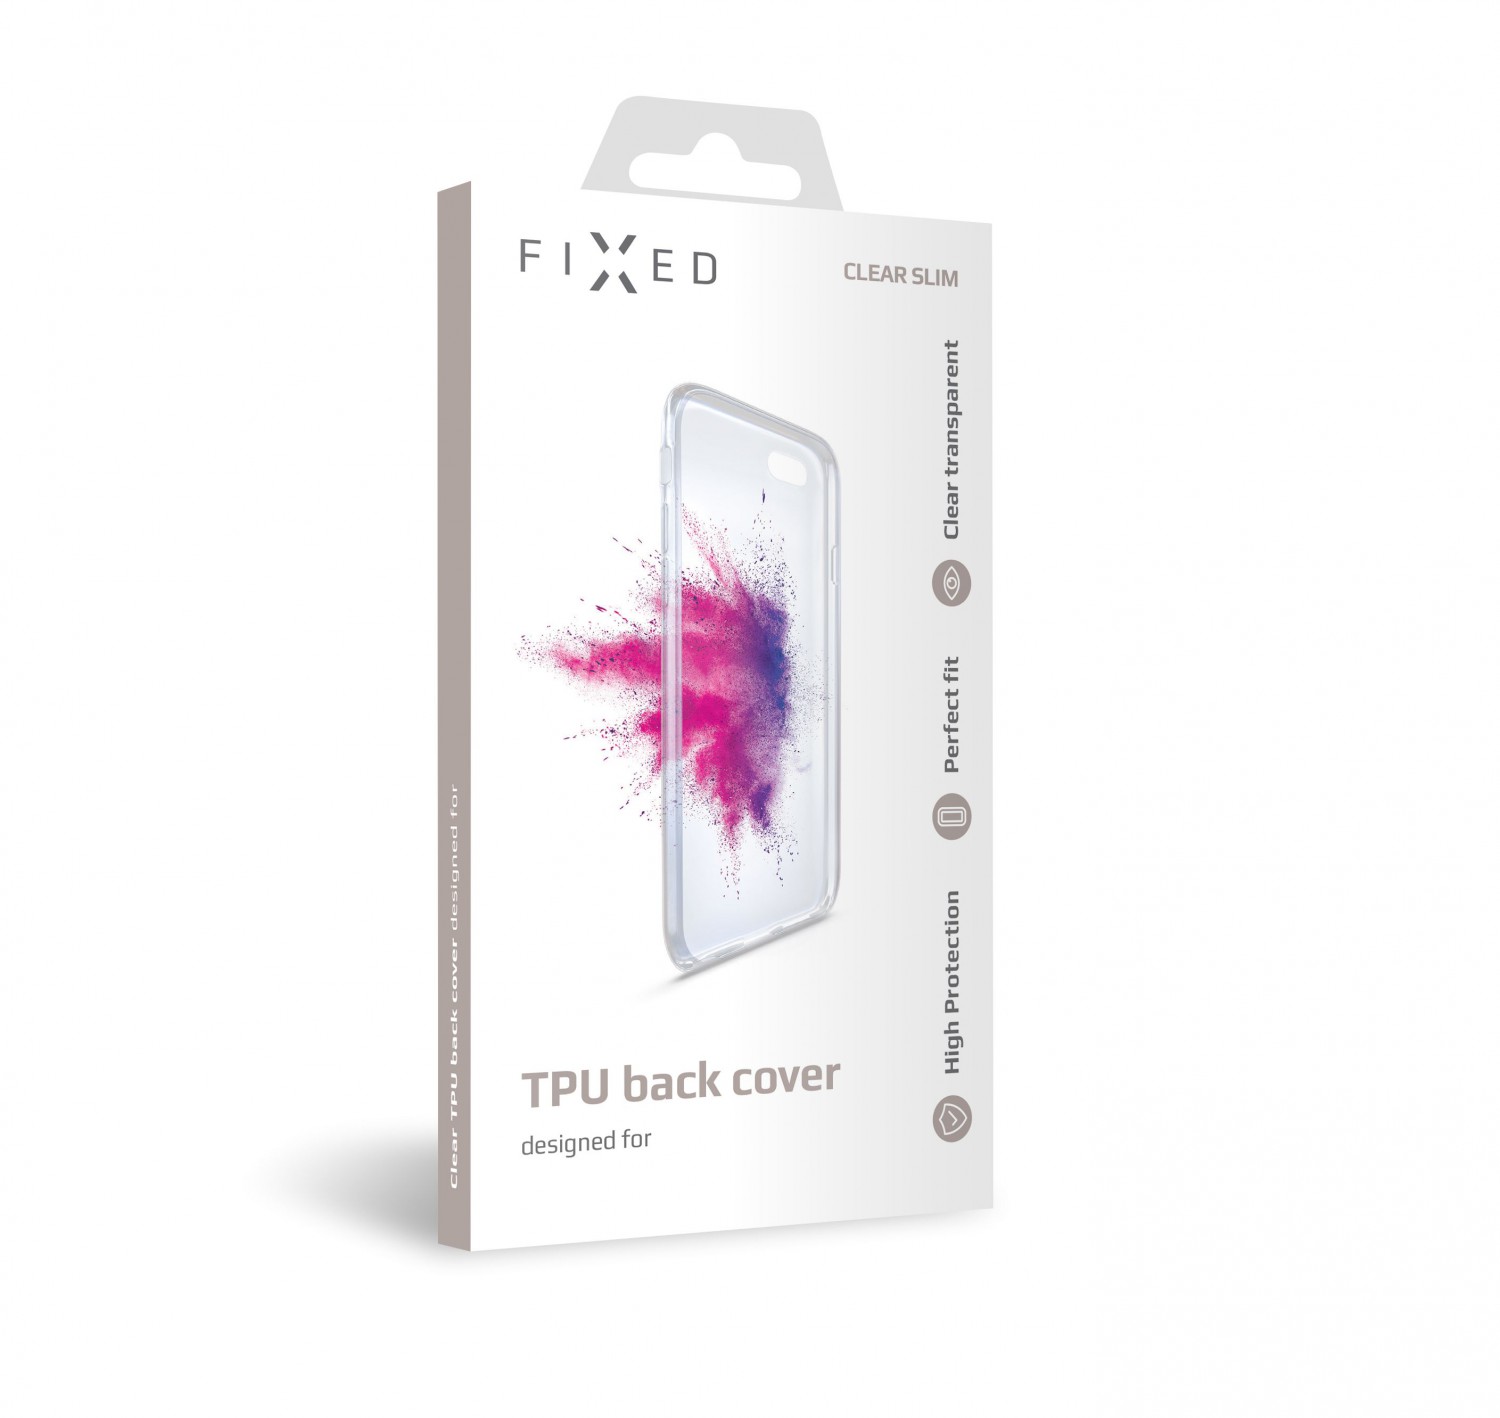 Silikonové pouzdro FIXED pro Xiaomi Mi Max 3, čiré